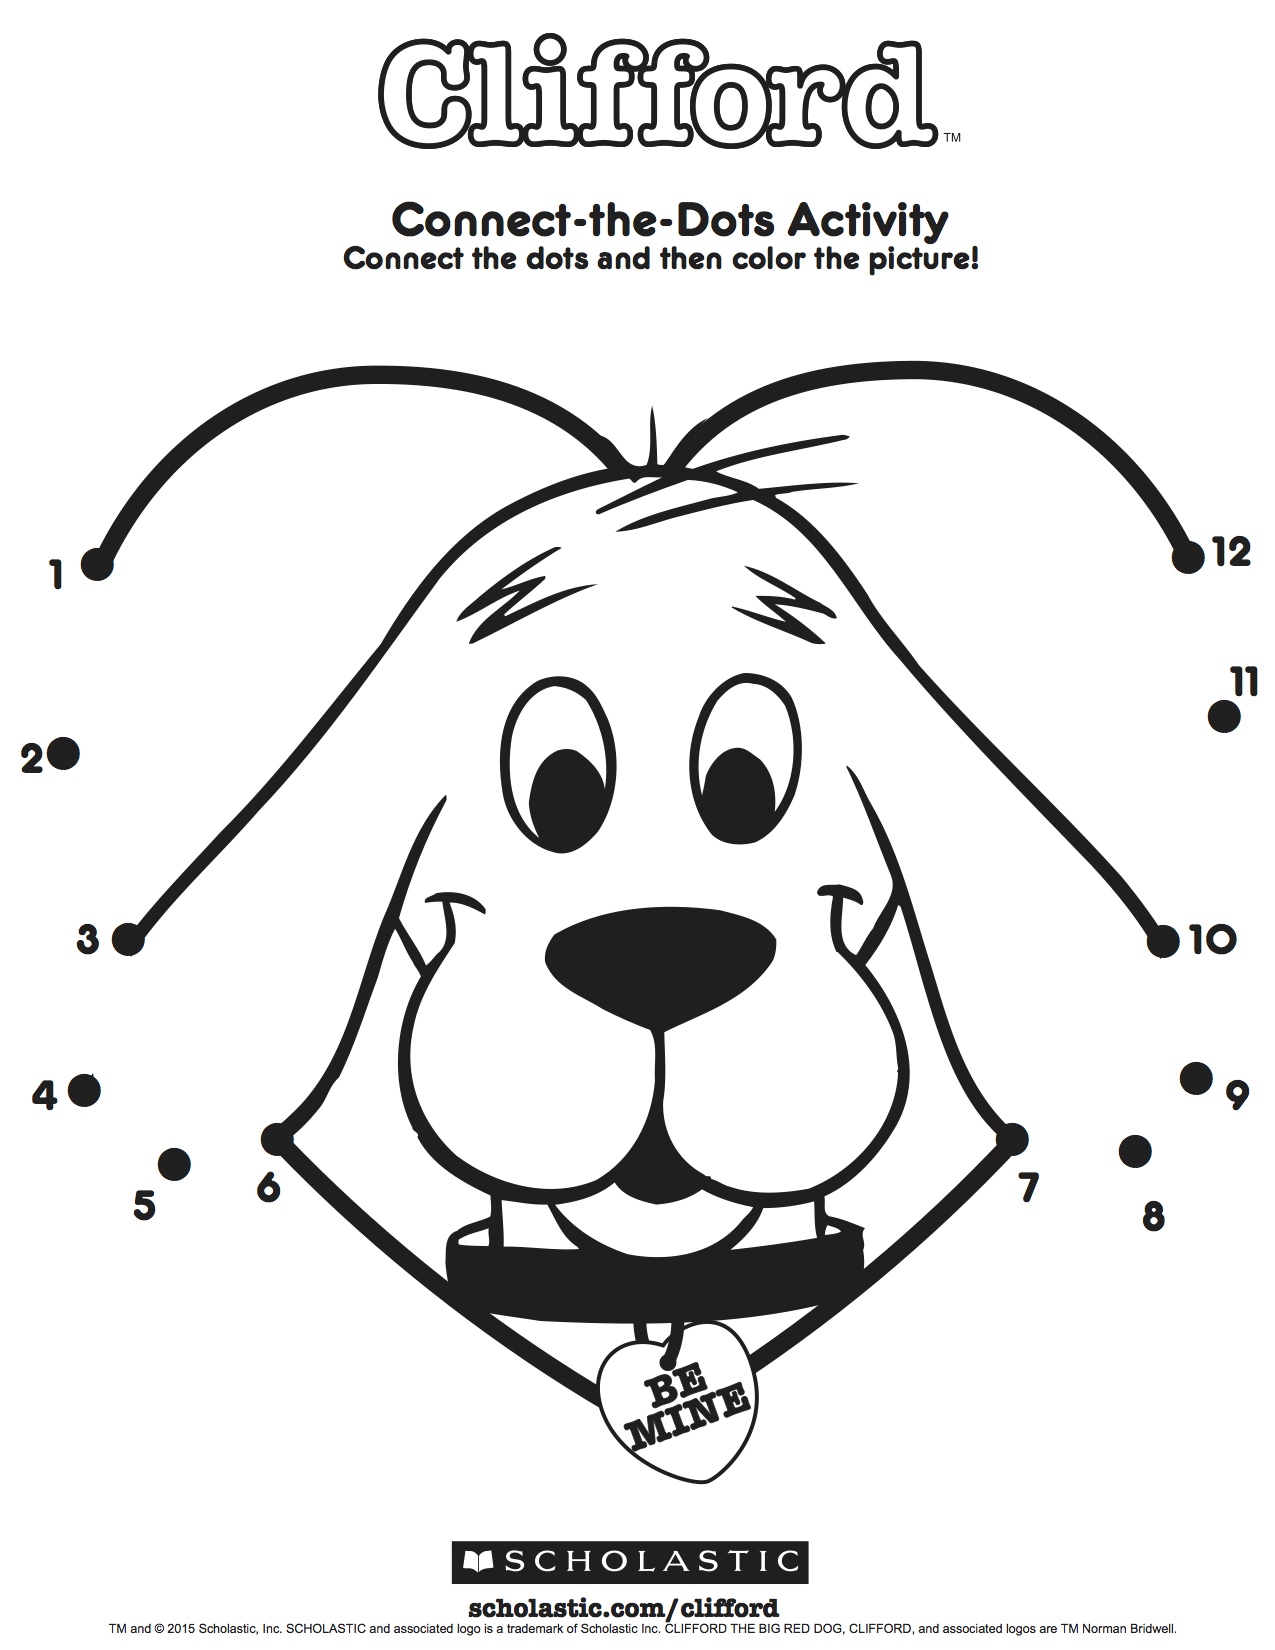 Clifford's Connect-the-Dots Activity | Worksheets & Printables | Scholastic | Parents1275 x 1650